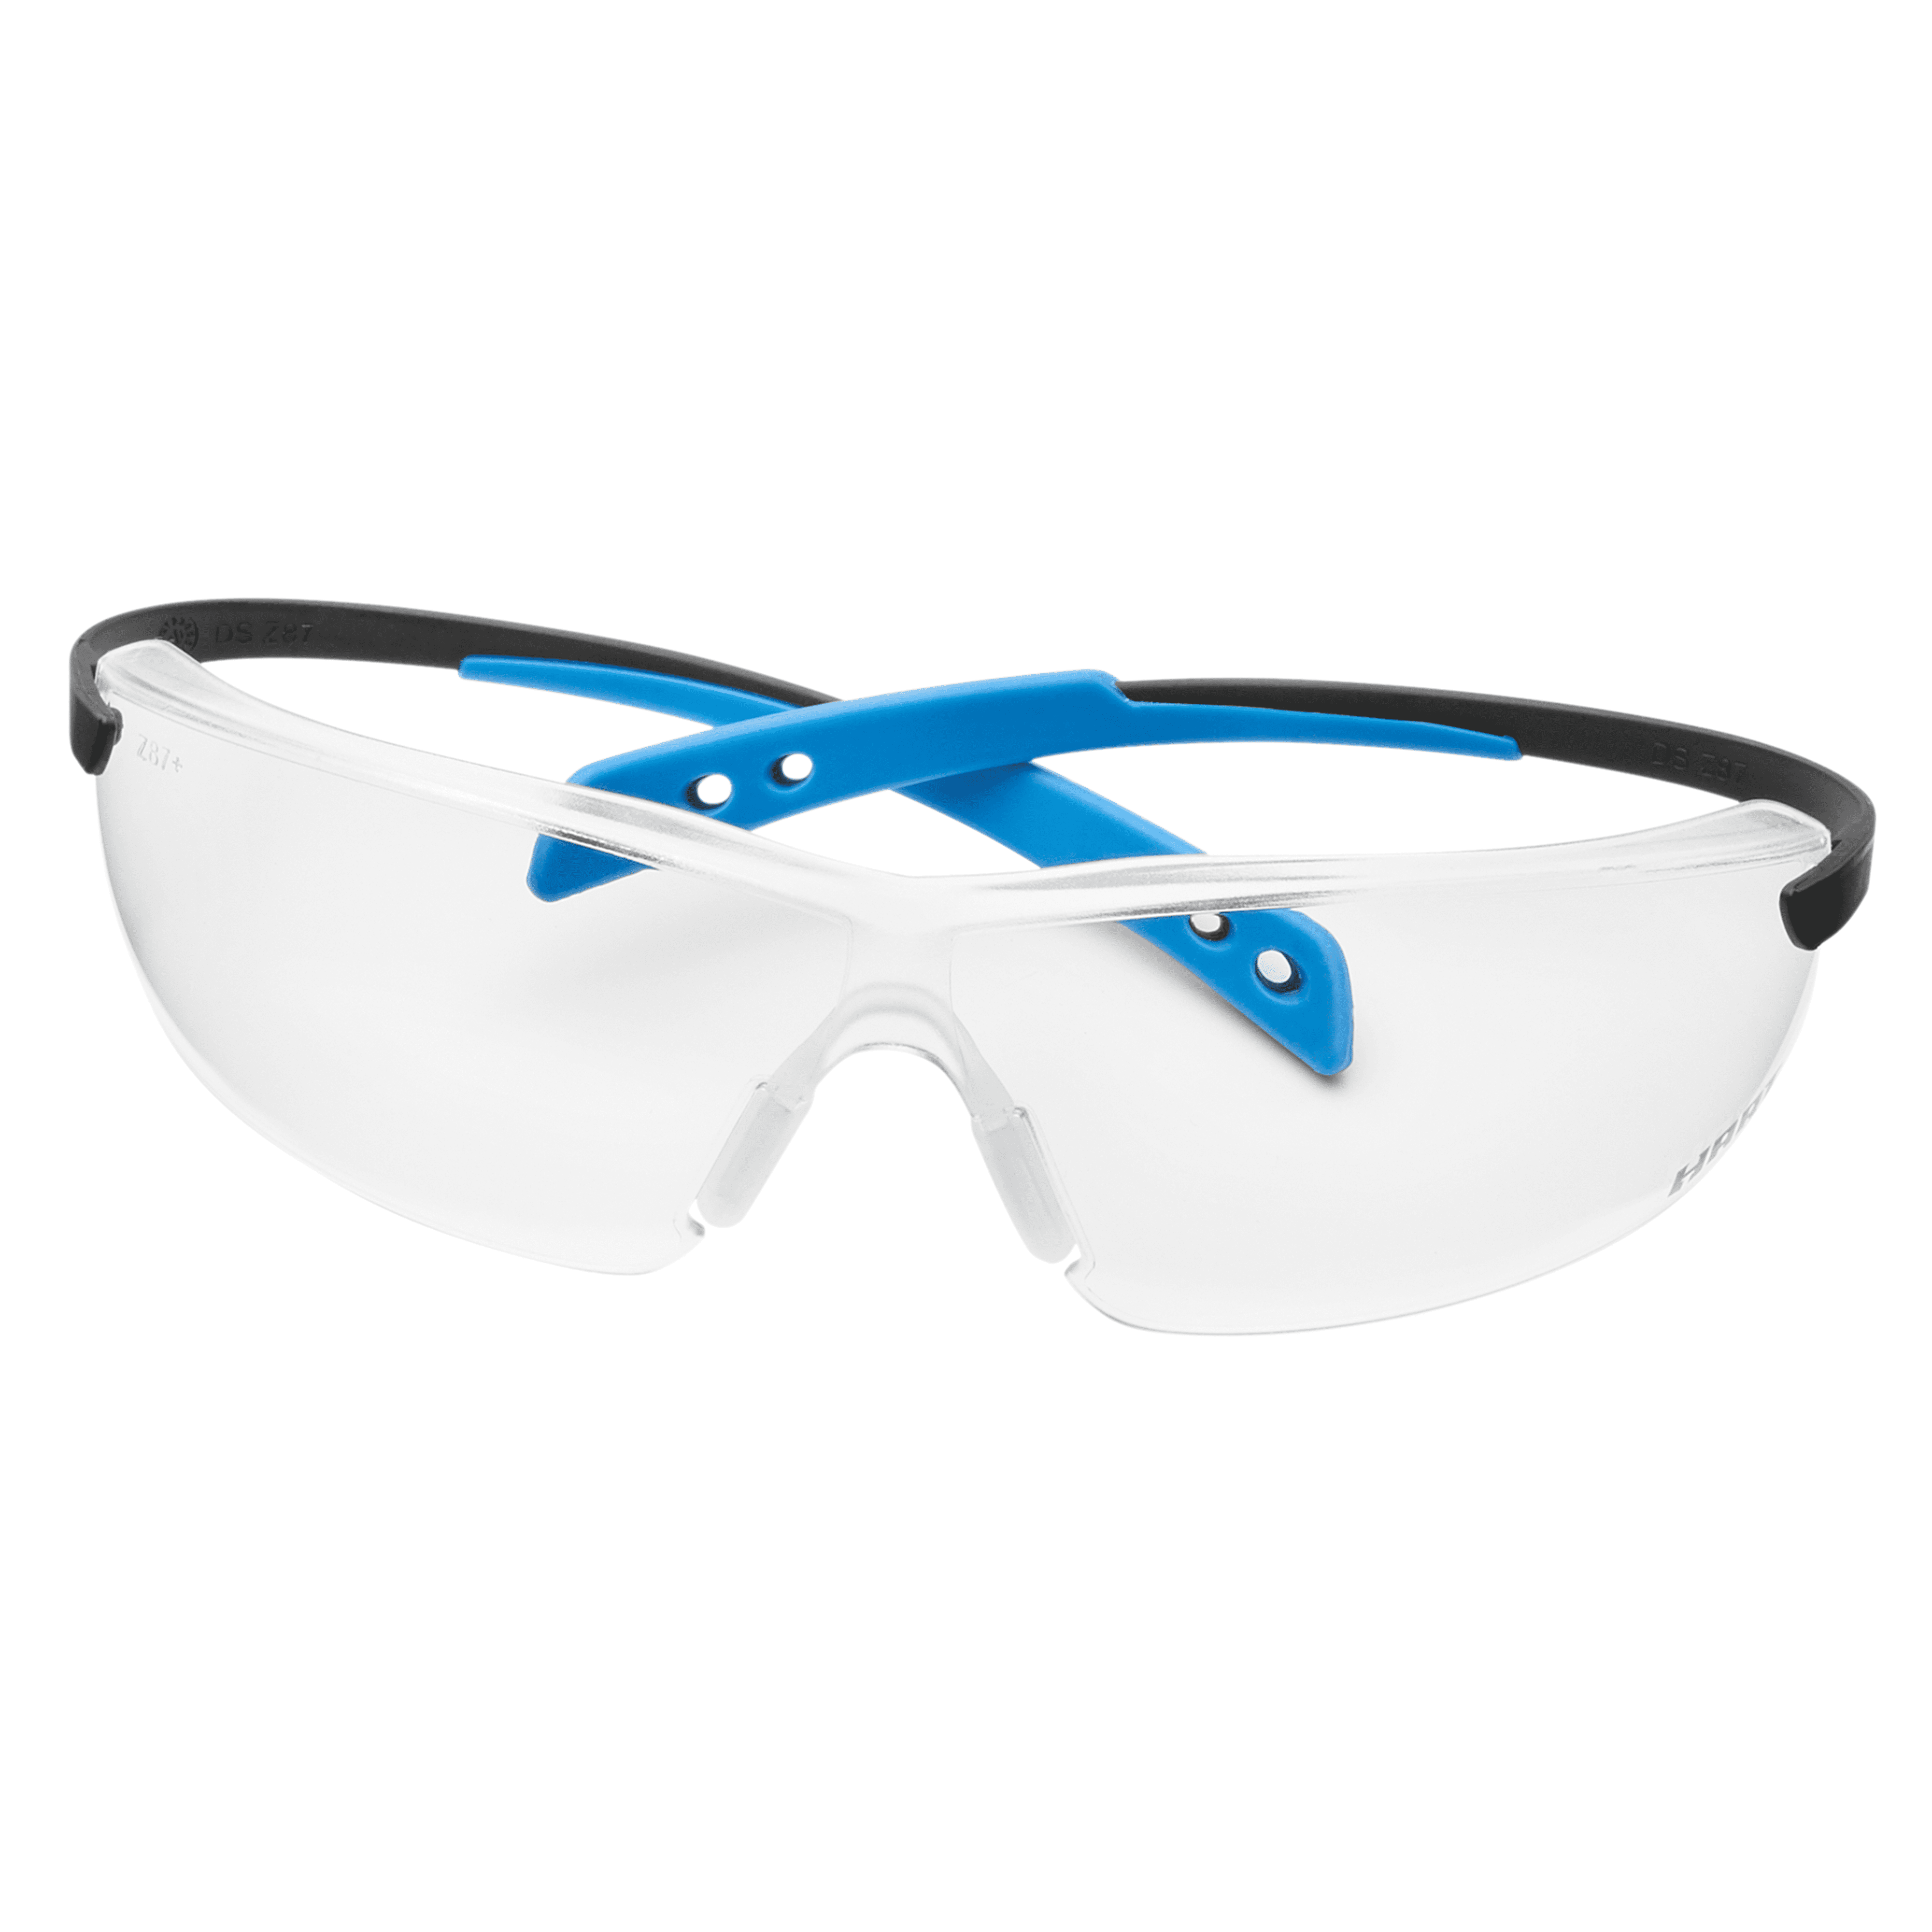 Safety Goggles Wrap Around Anti-impact Eye Protection Lab Work Eyewear Glasses